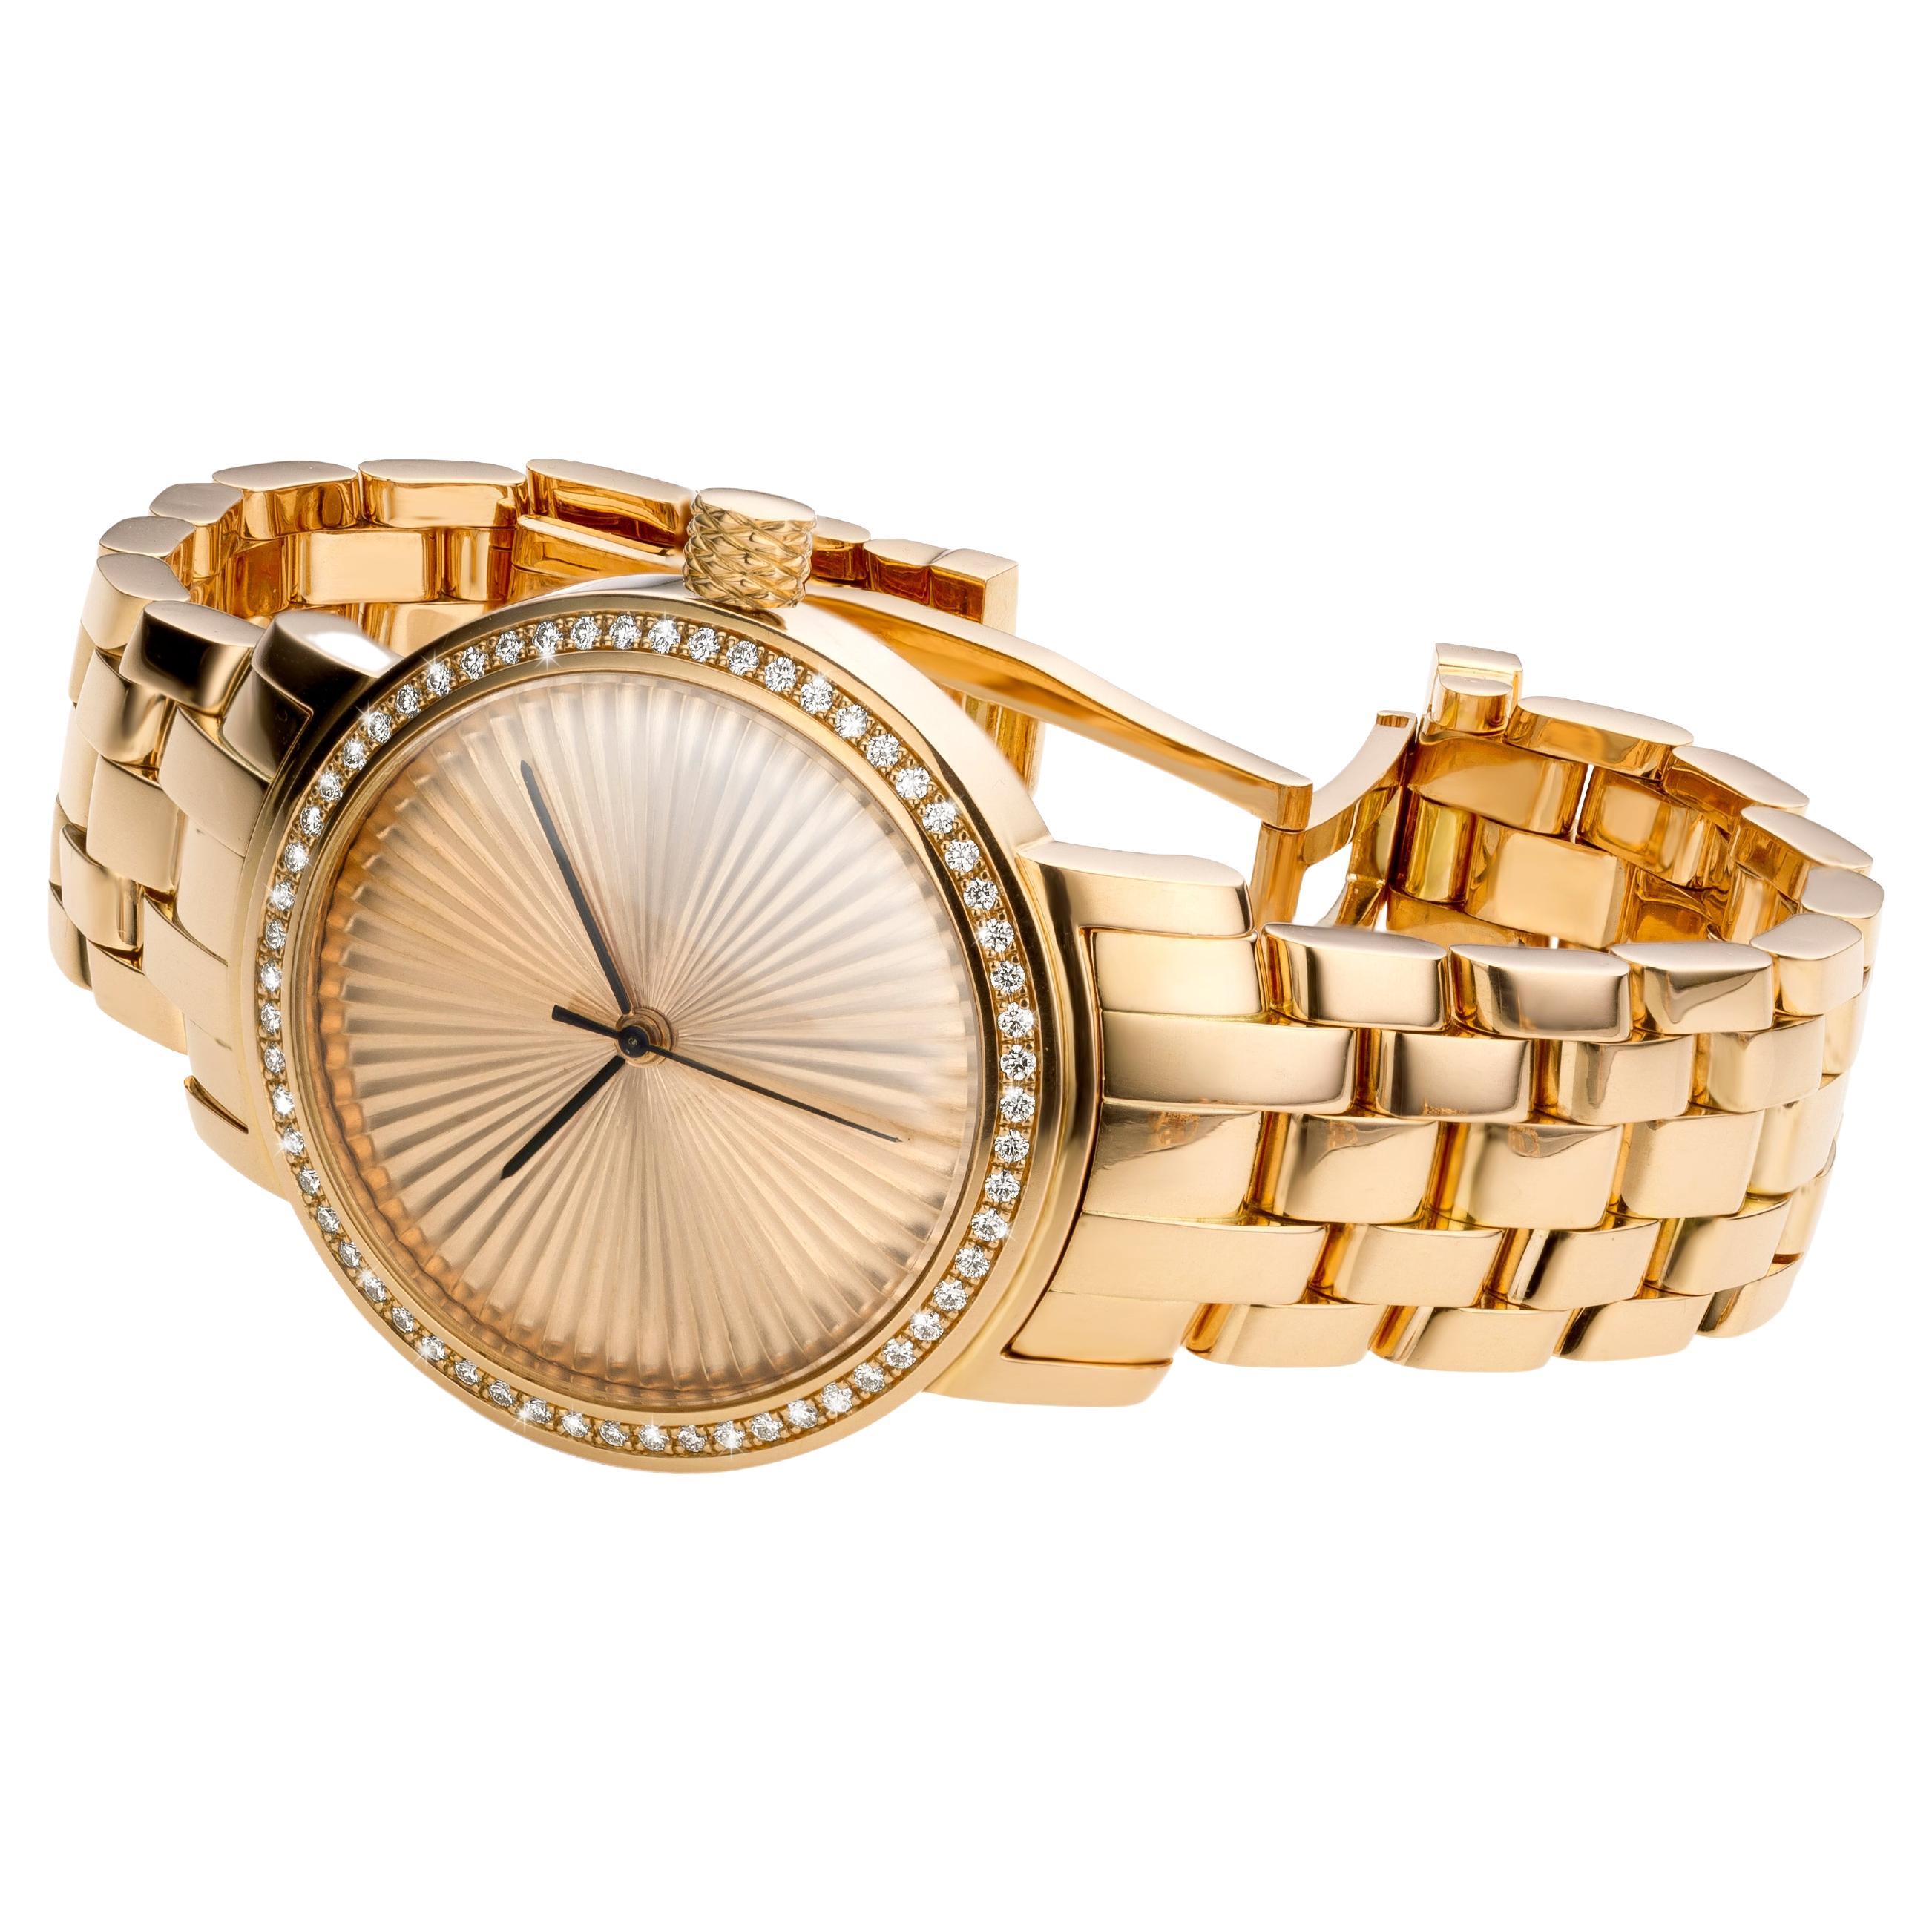 Cober N°2 Damen Automatik Gelbgold mit 60 Diamanten Armbanduhr handgefertigt 